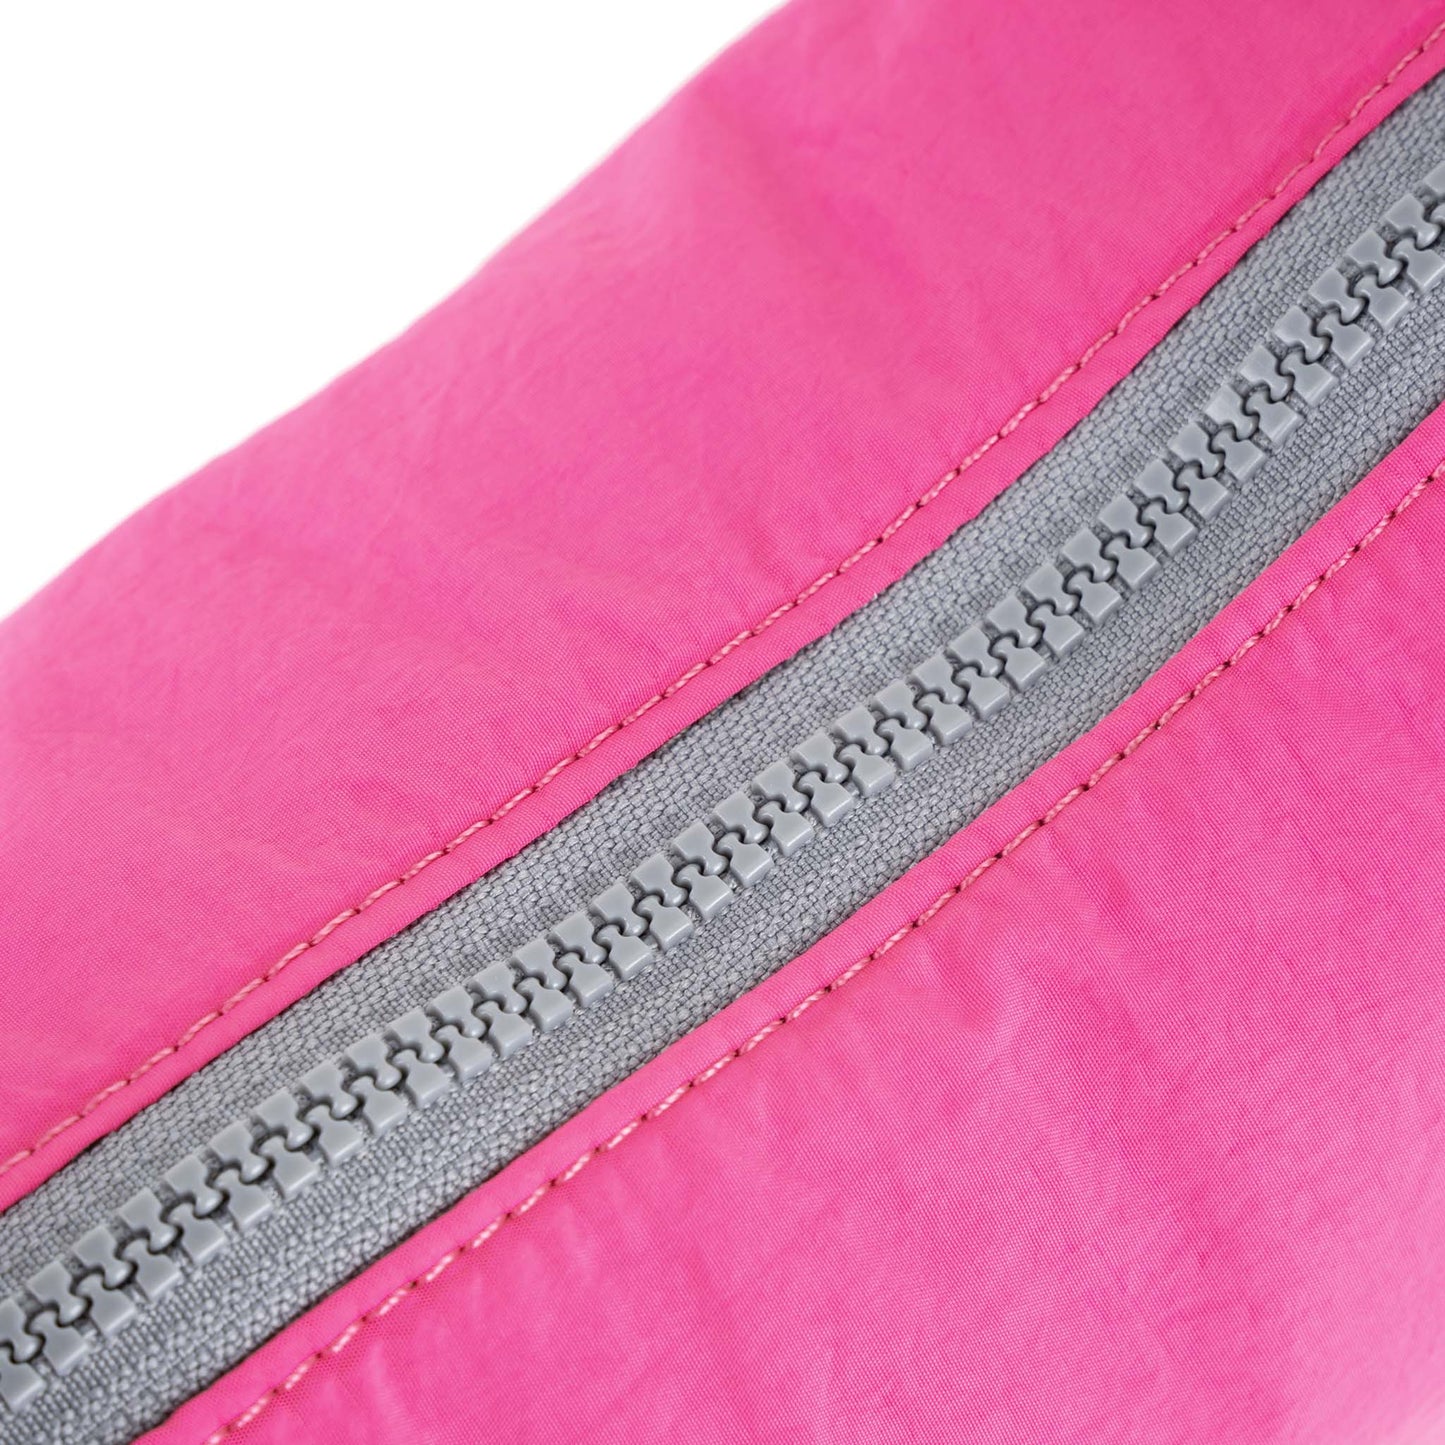 Roka Farringdon Sling Bag, Hot Pink